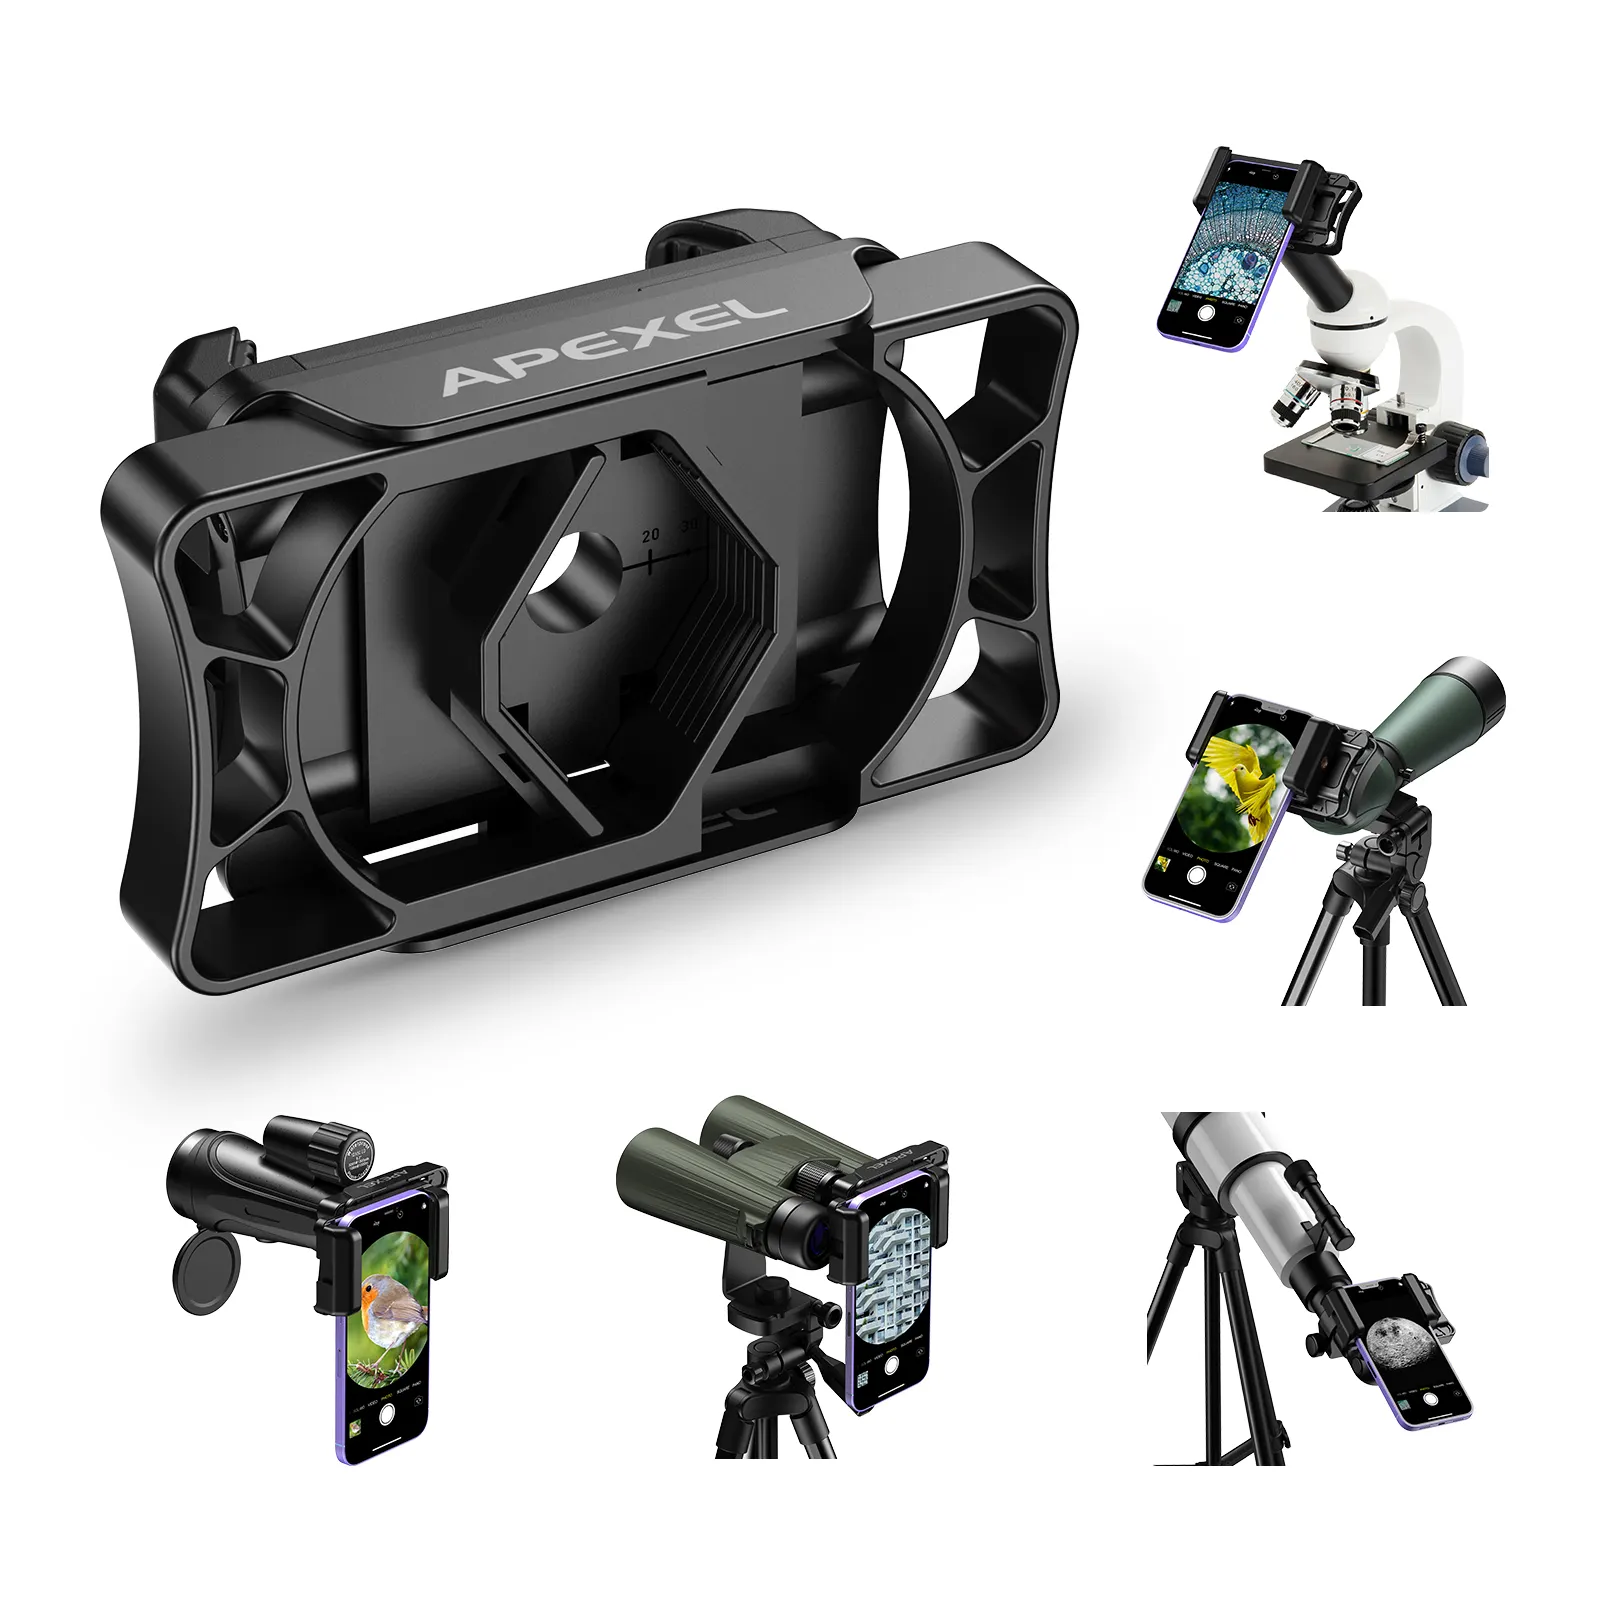 APEXEL F002 Private Mold Smartphone Adapter Mount for Binoculars, Monocular, Telescope, Microscopes